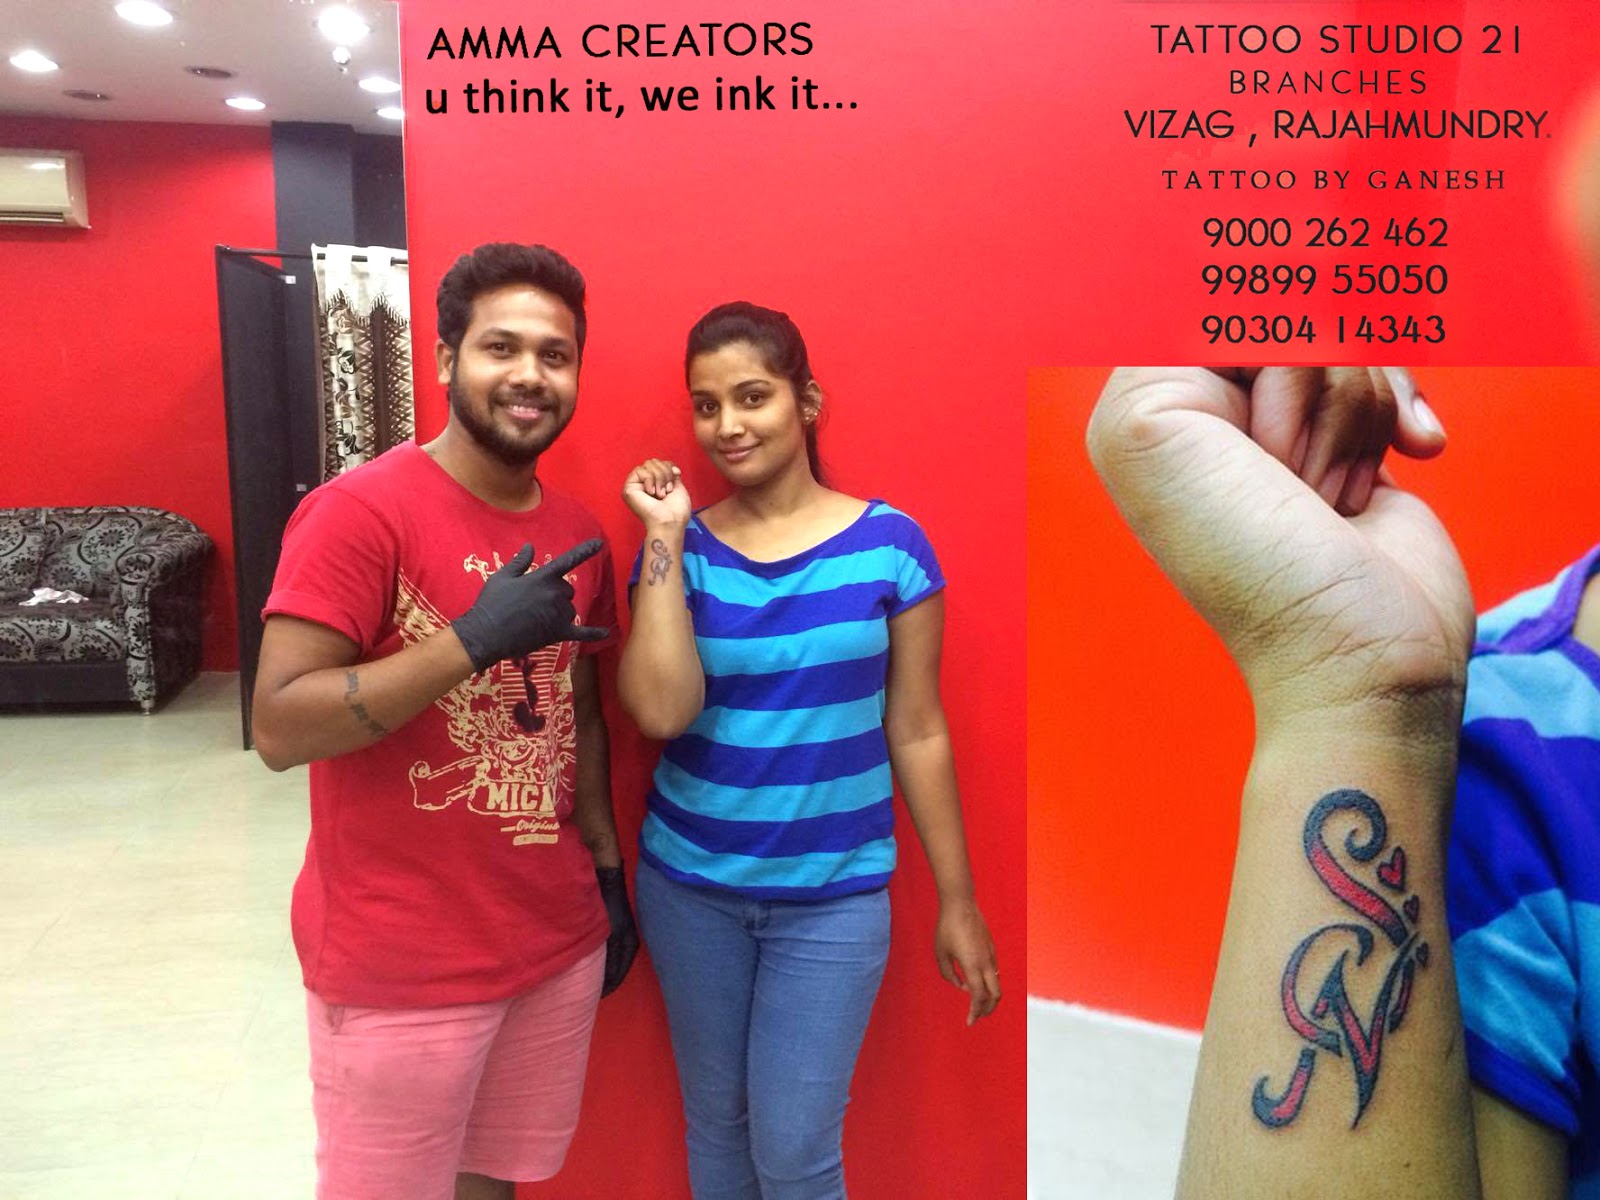 Tattoo Designers Behind Amma Gill Road in Rajahmundry - Justdial